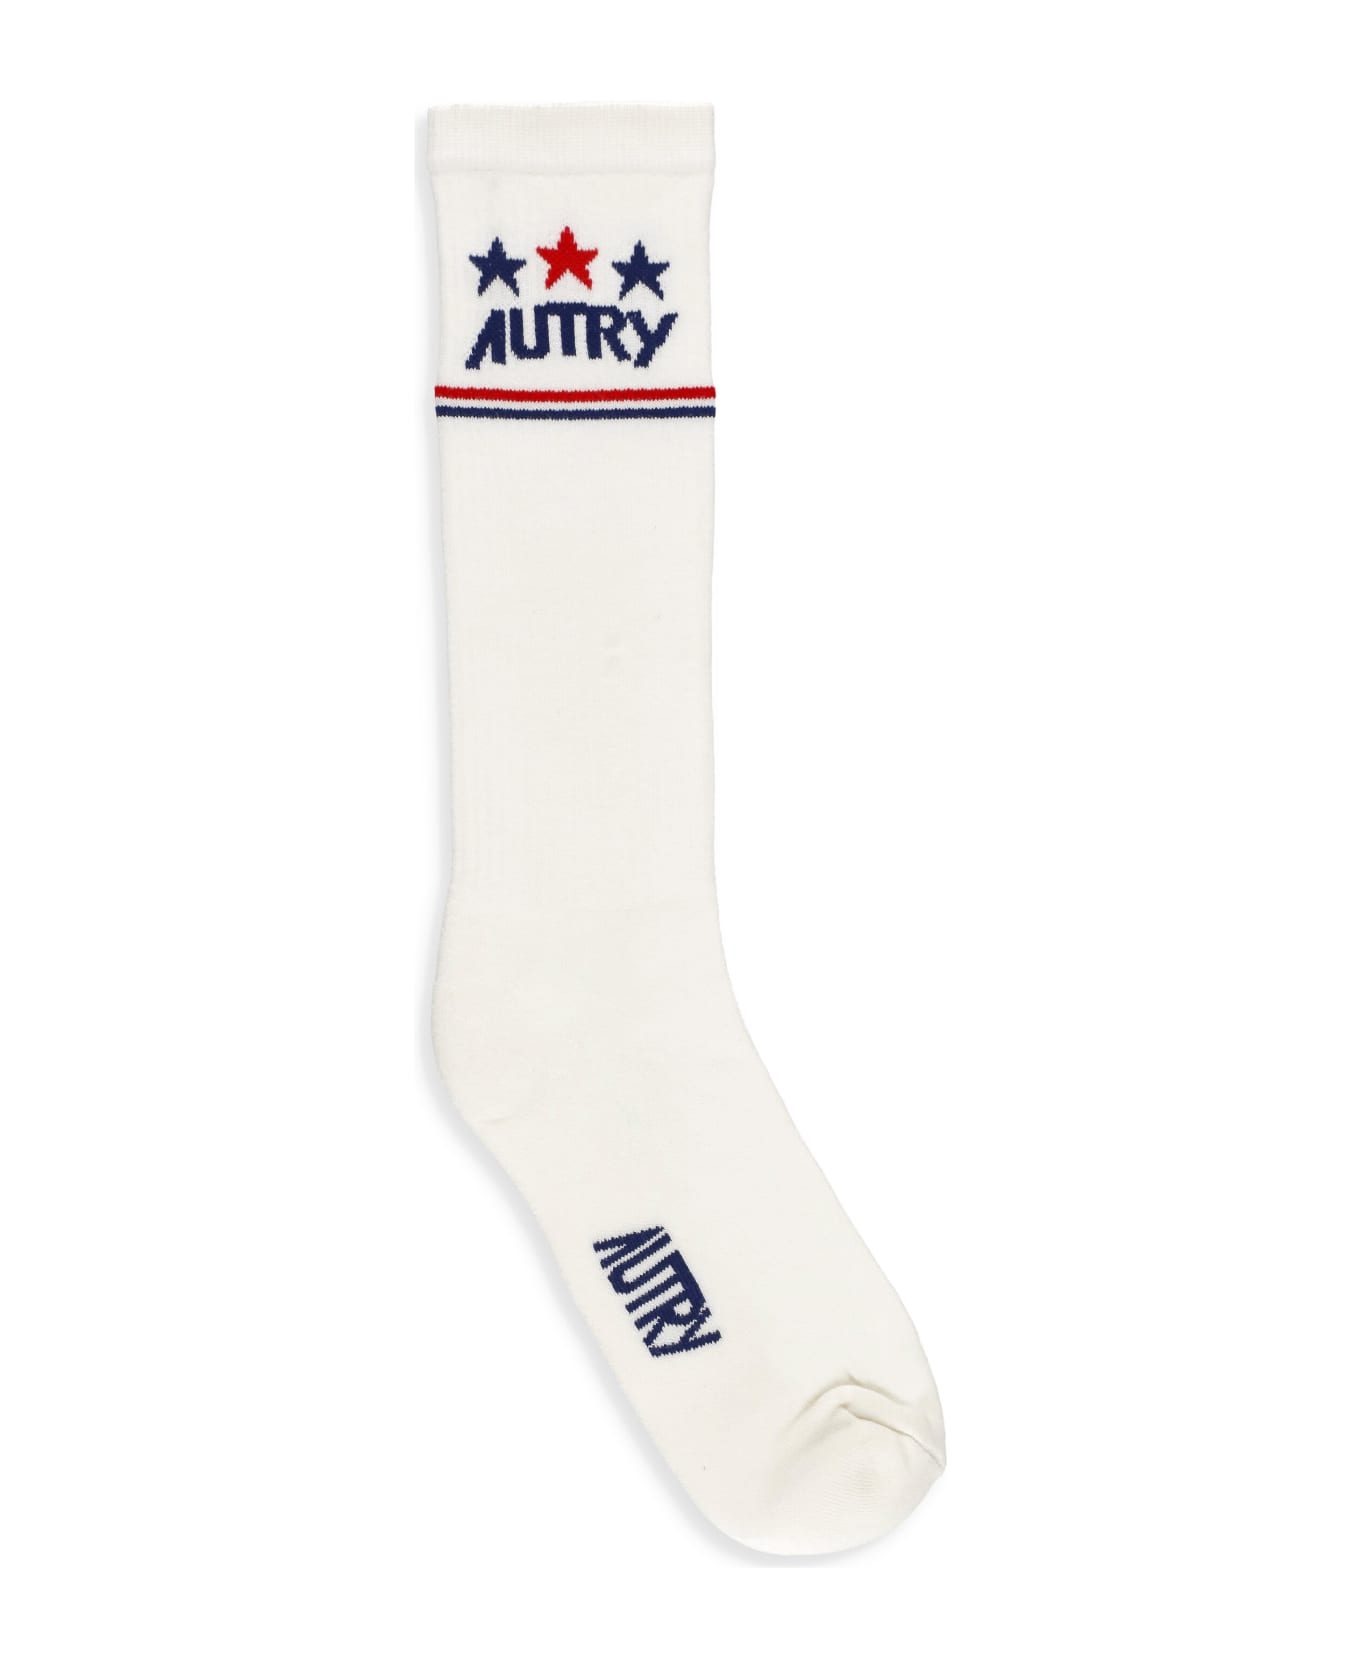 Autry Cotton Socks - Wht/star 靴下